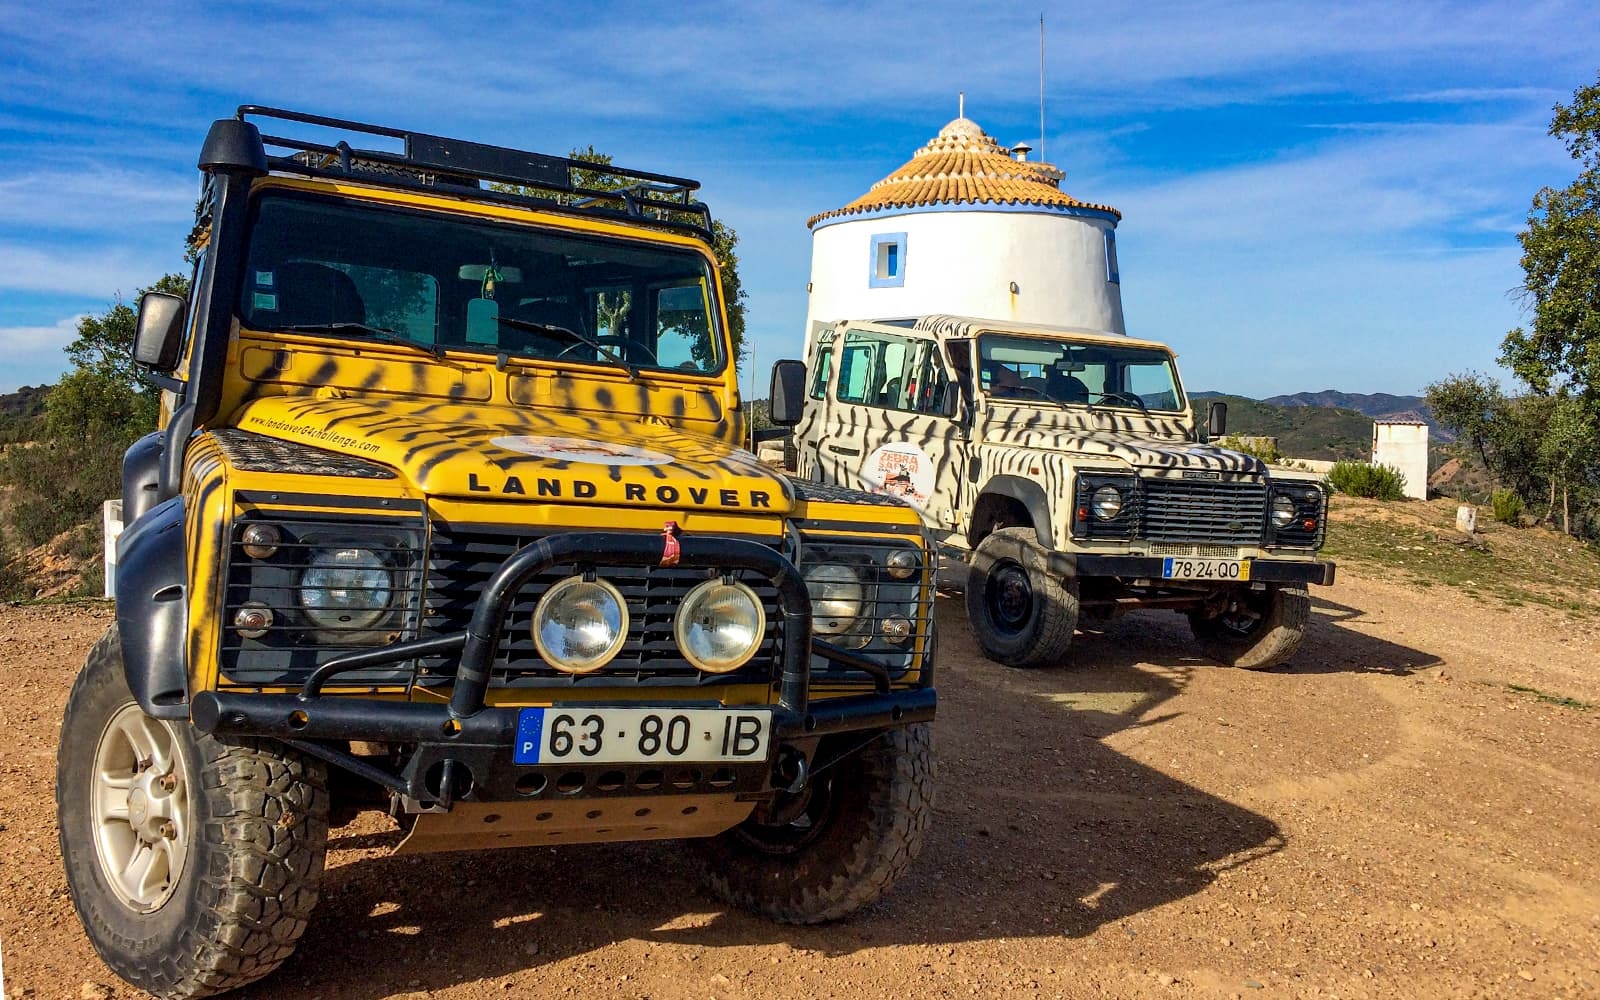 Jeep Safari Tour - Full Day From Albufeira